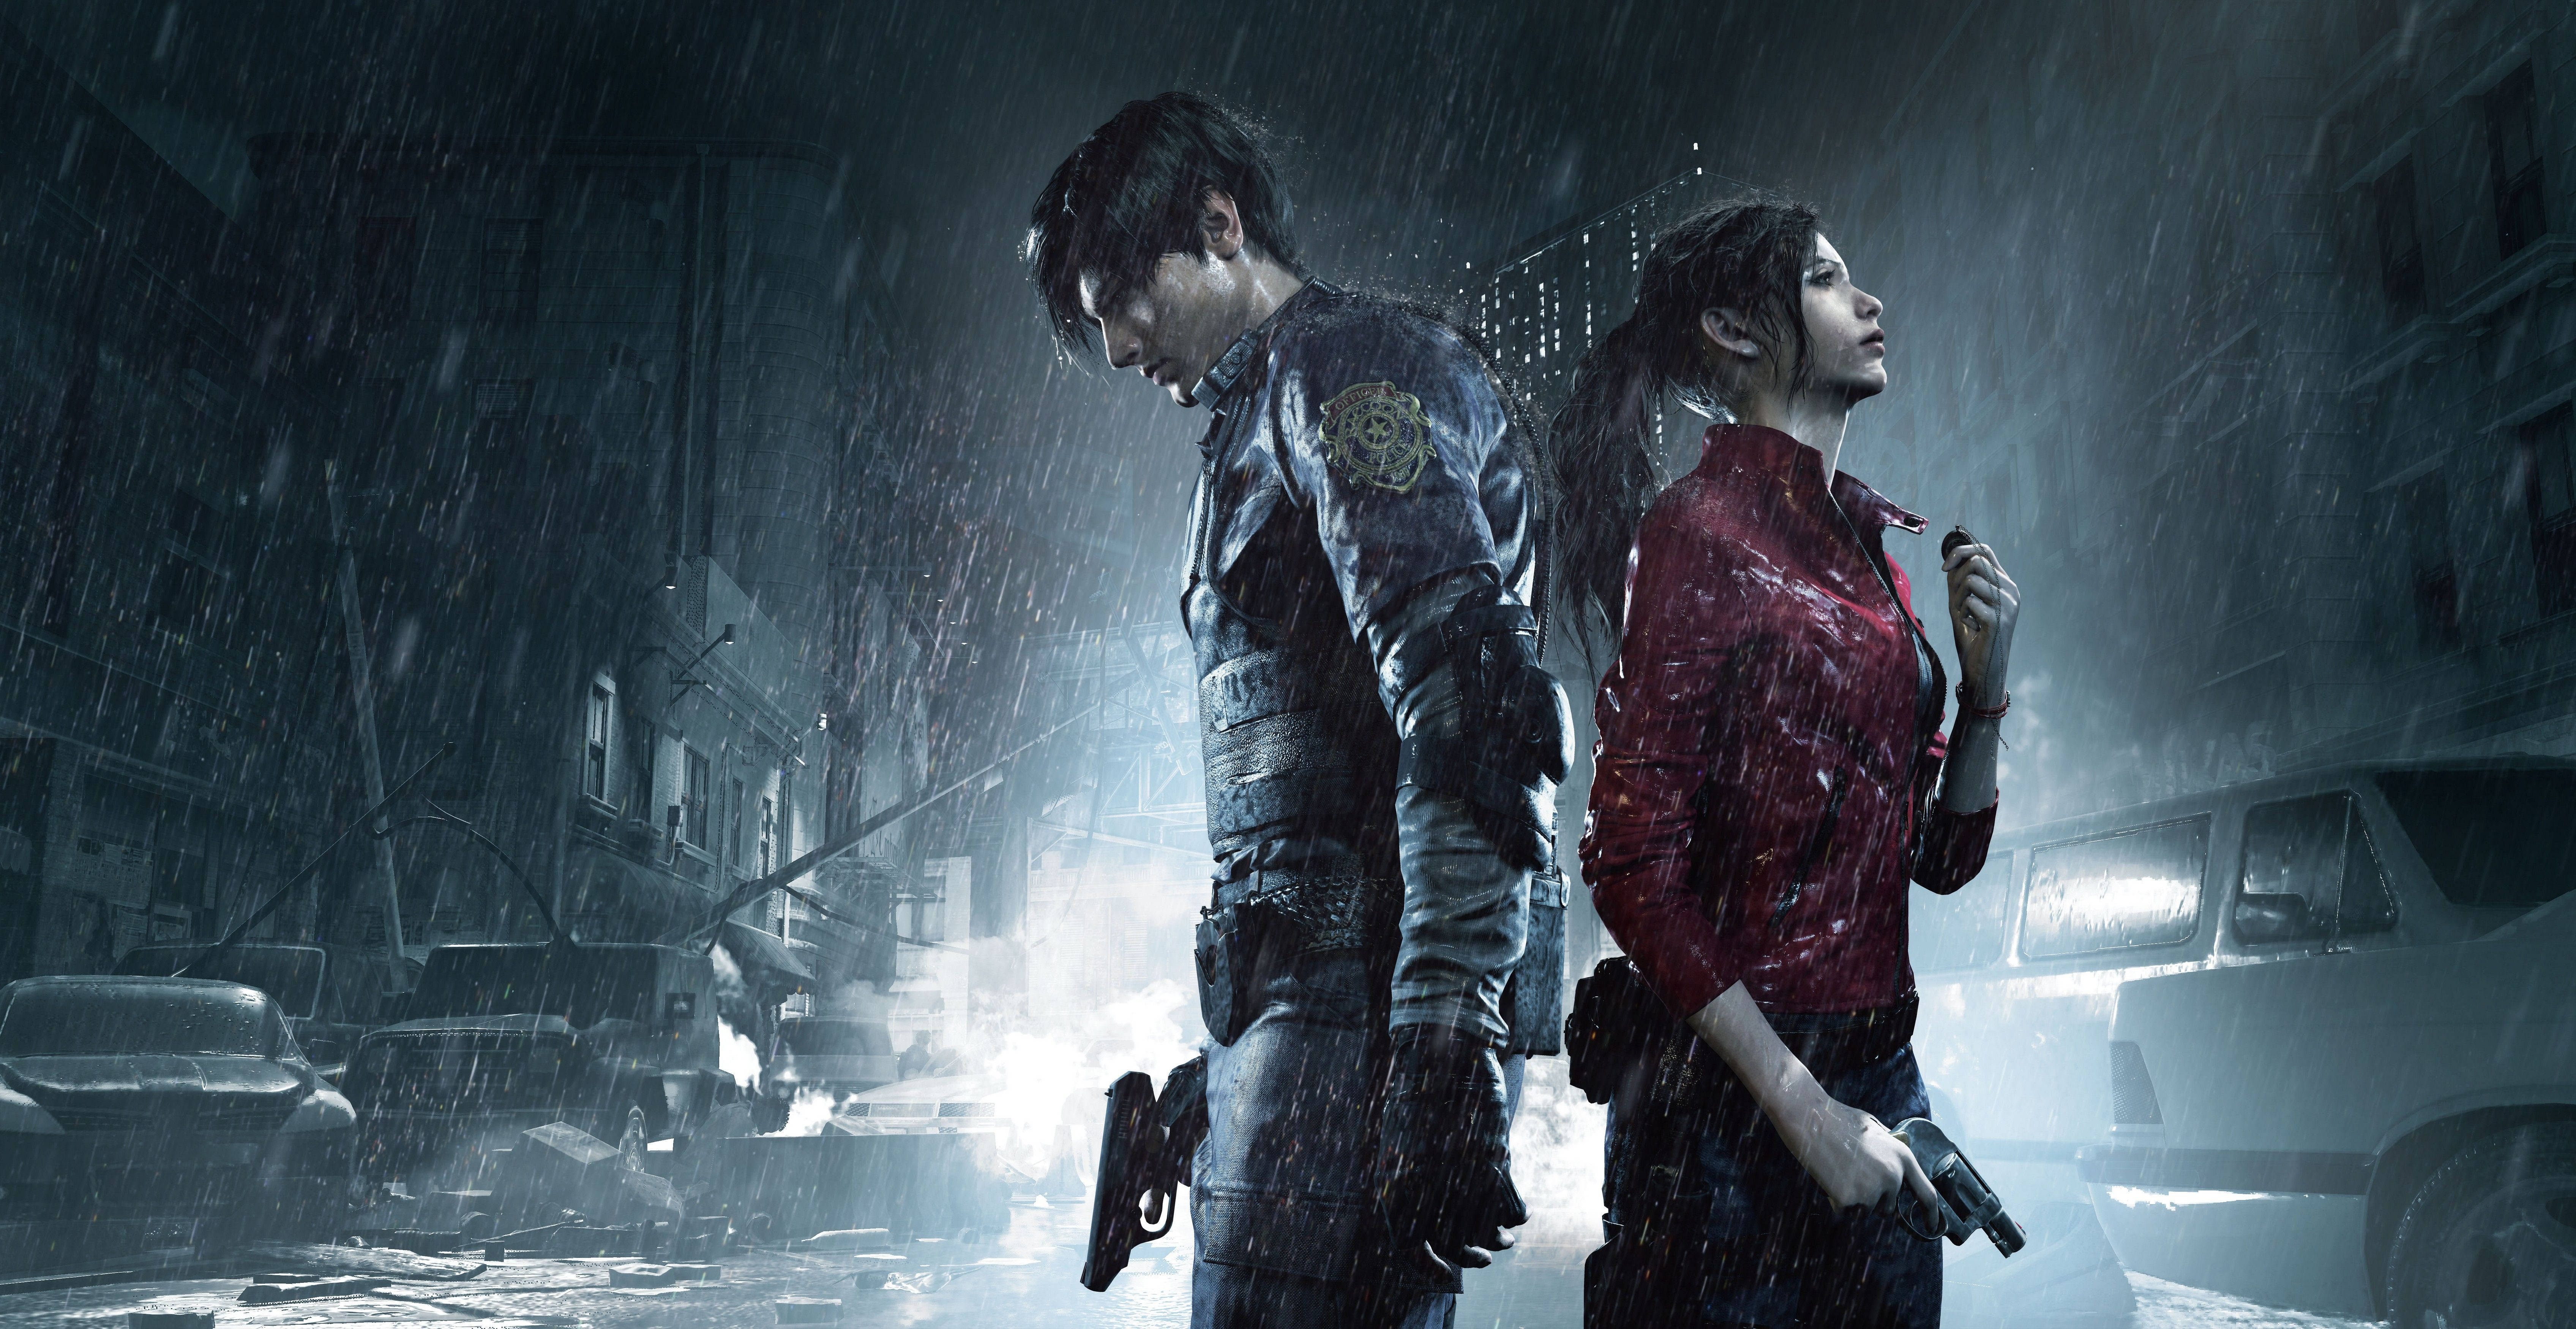 Resident Evil 2 2019 4k, Hd Games, 4k Wallpaper, Image Background